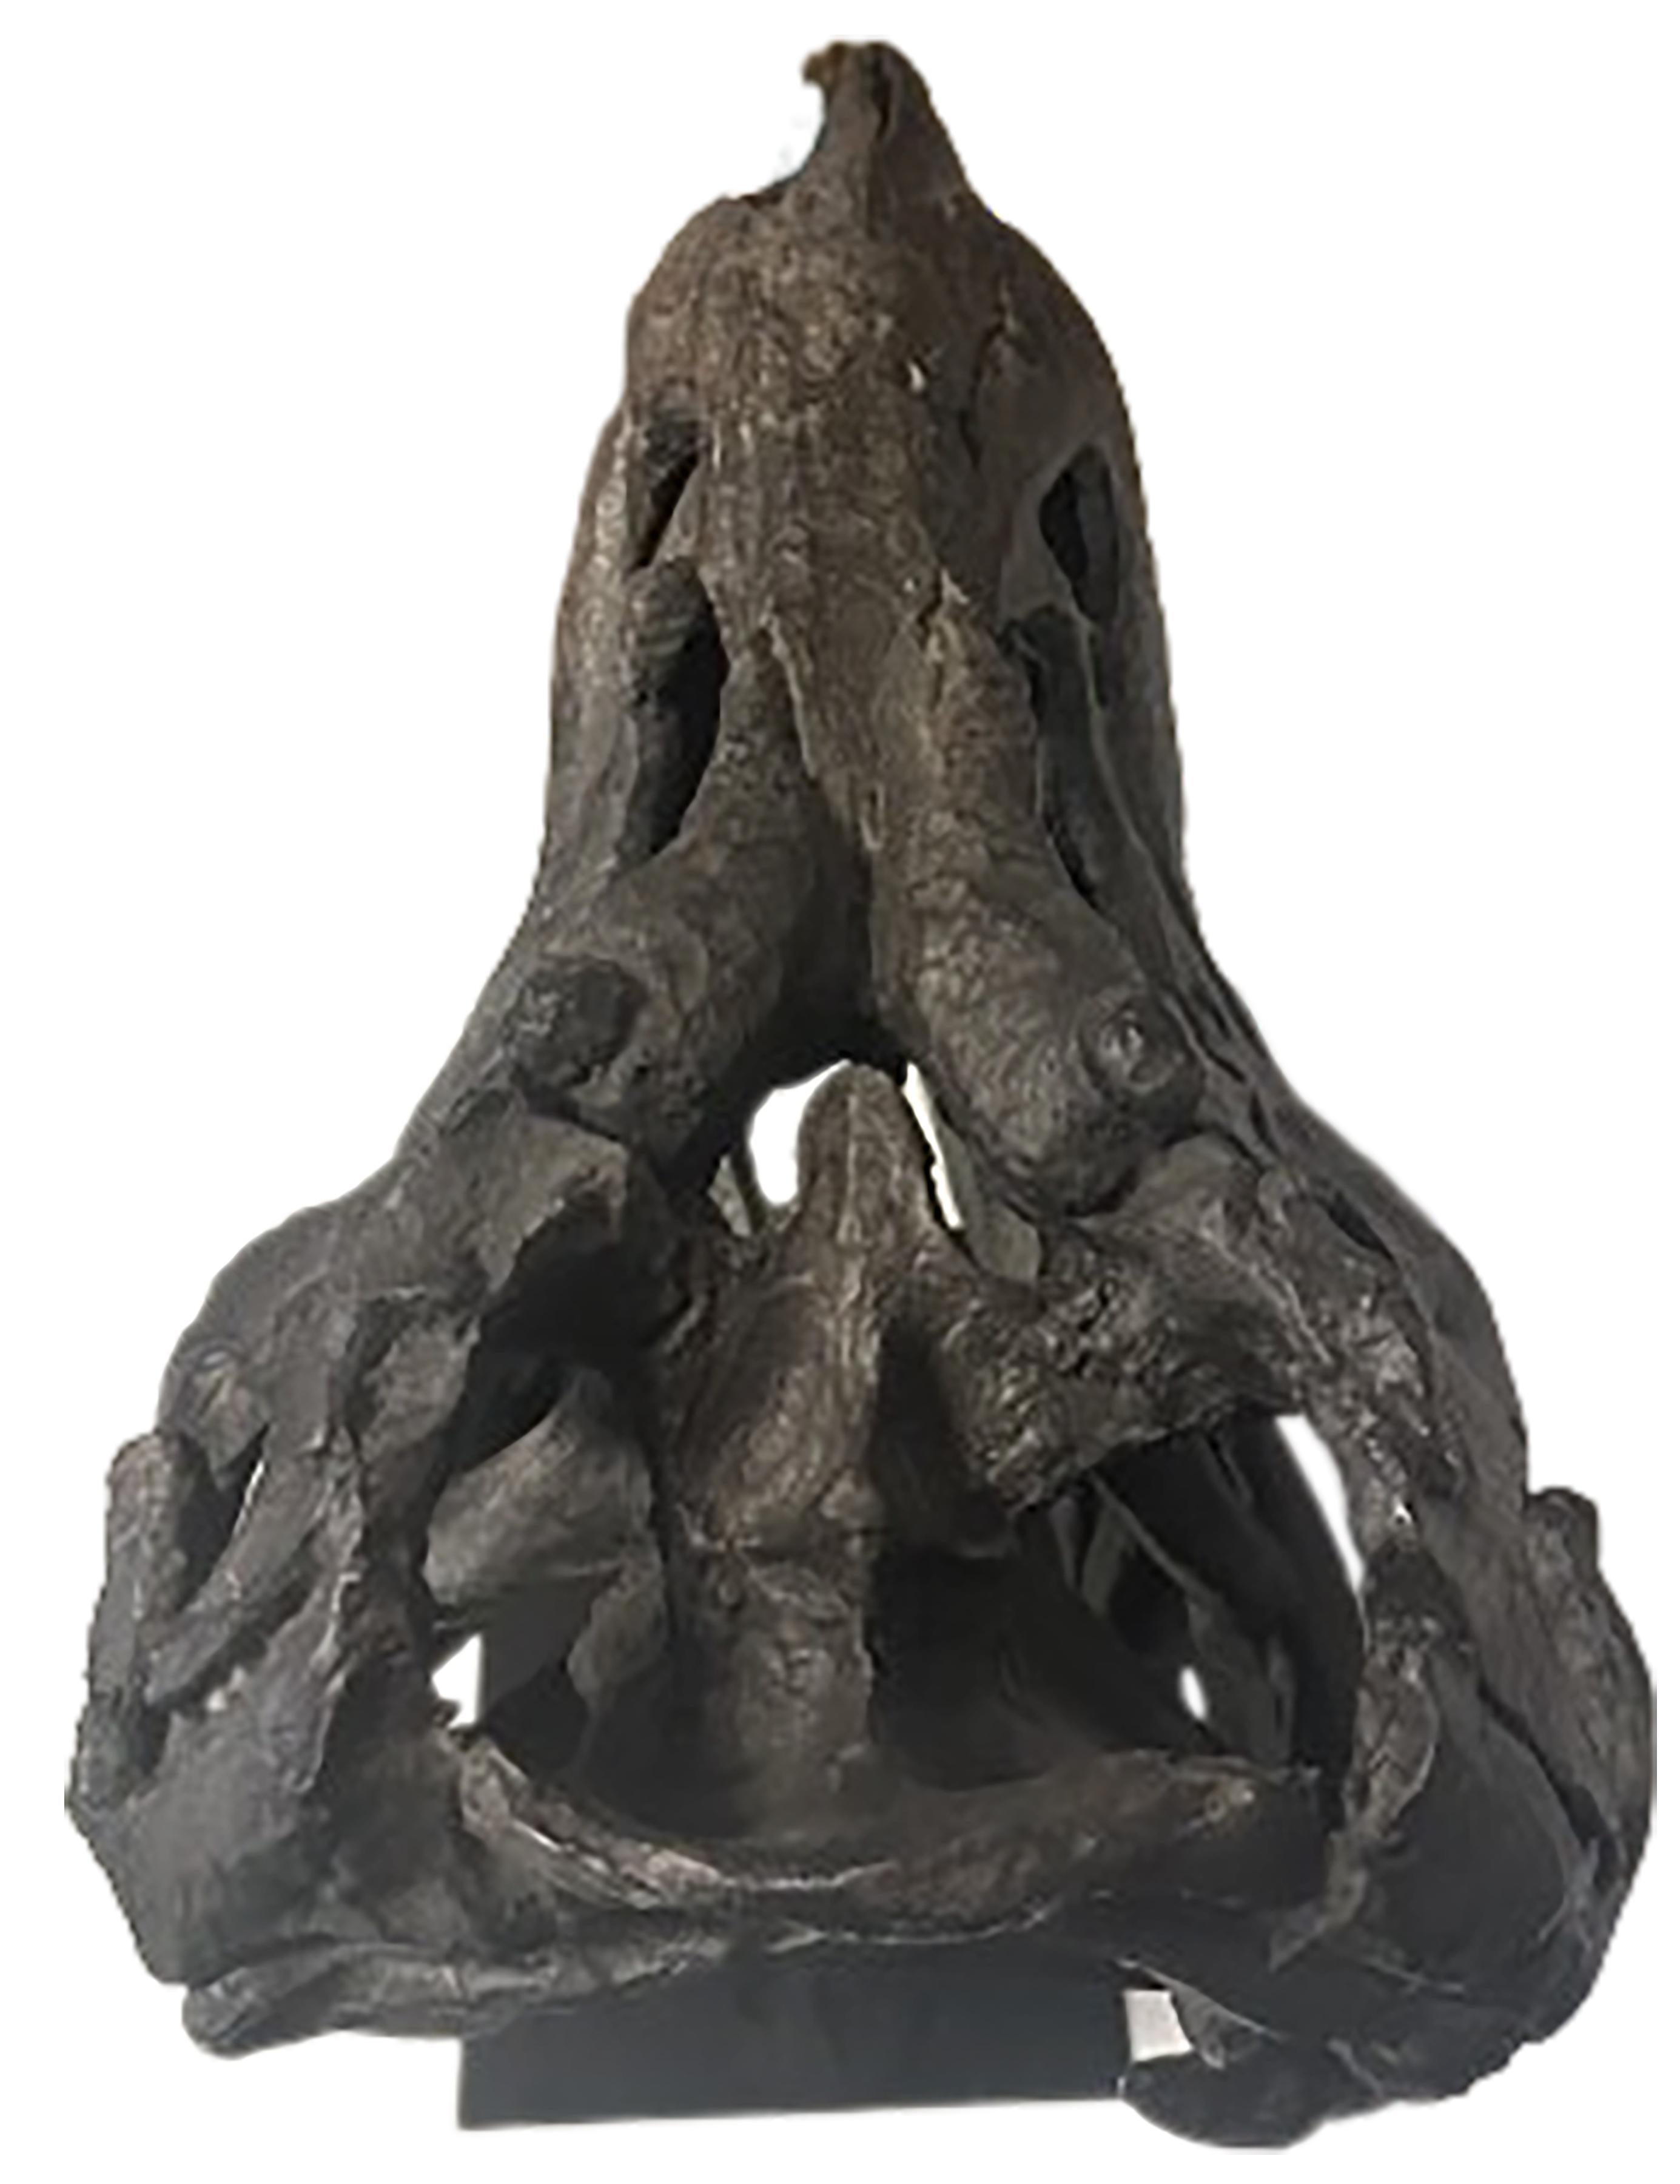 North American Glazed Dark Bronze Finish Dinosaur Skull with Base For Sale